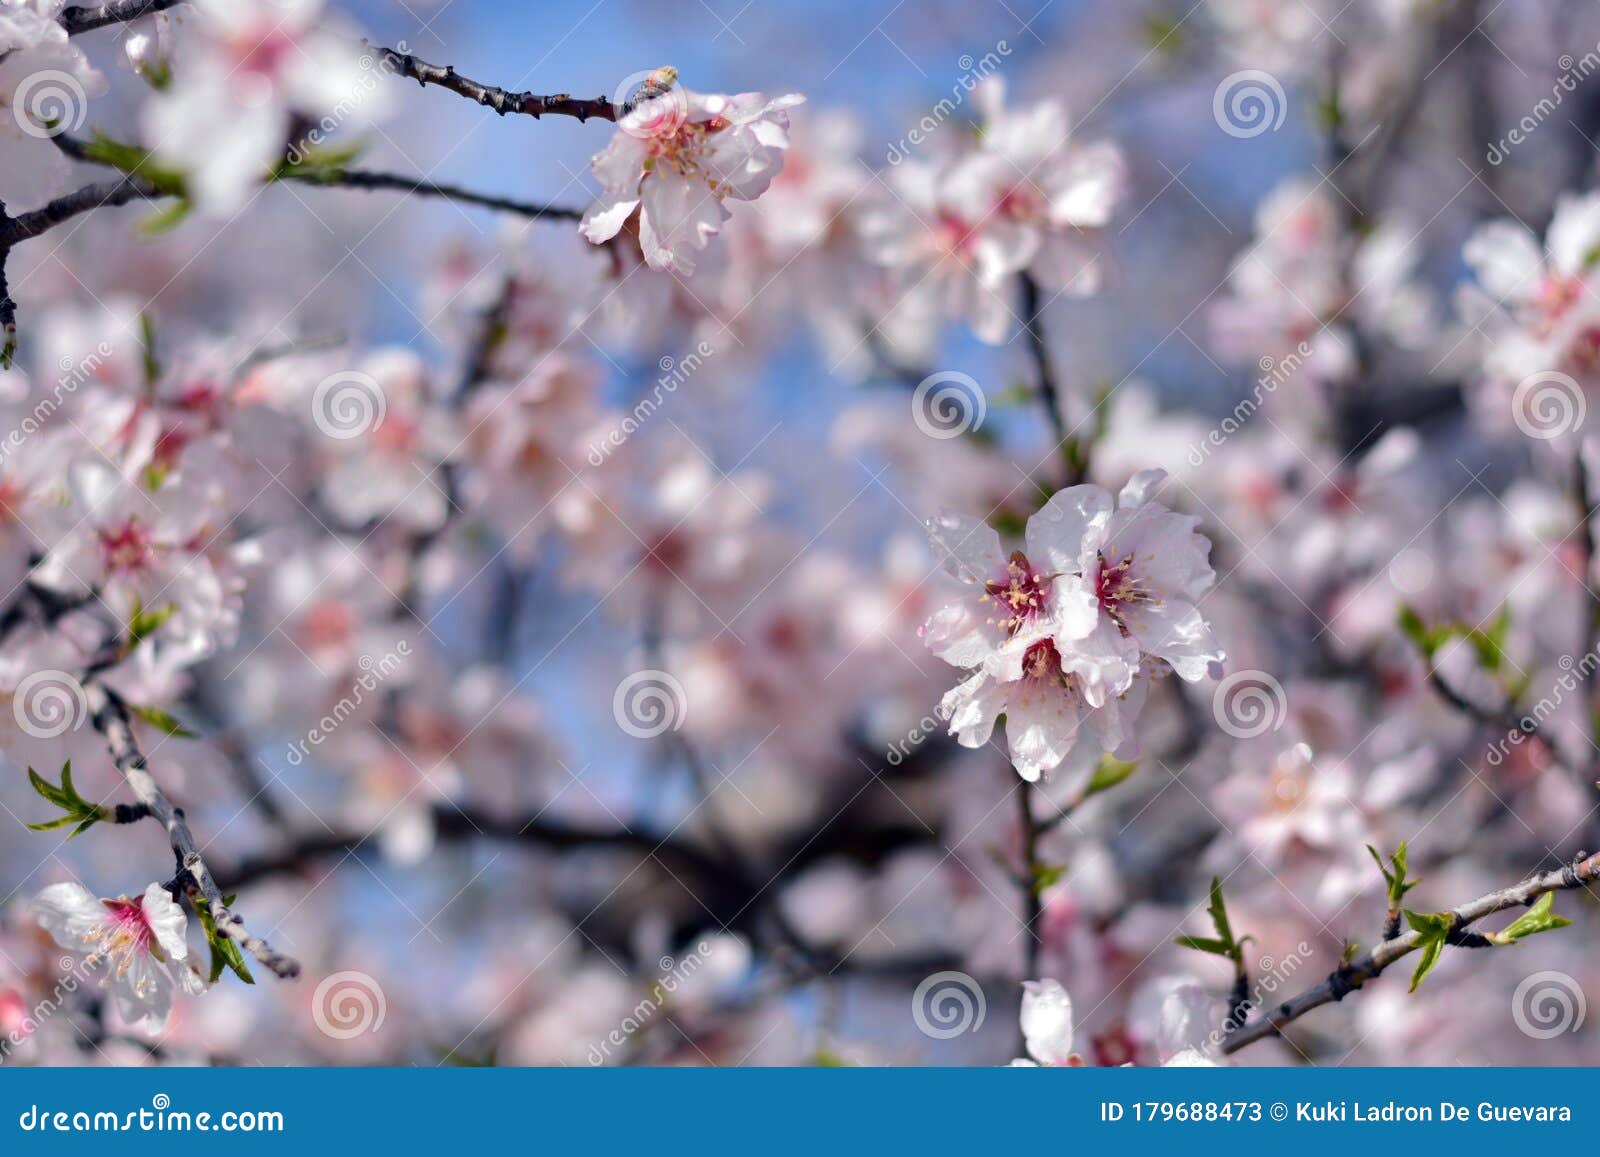 almond blossoms in winter